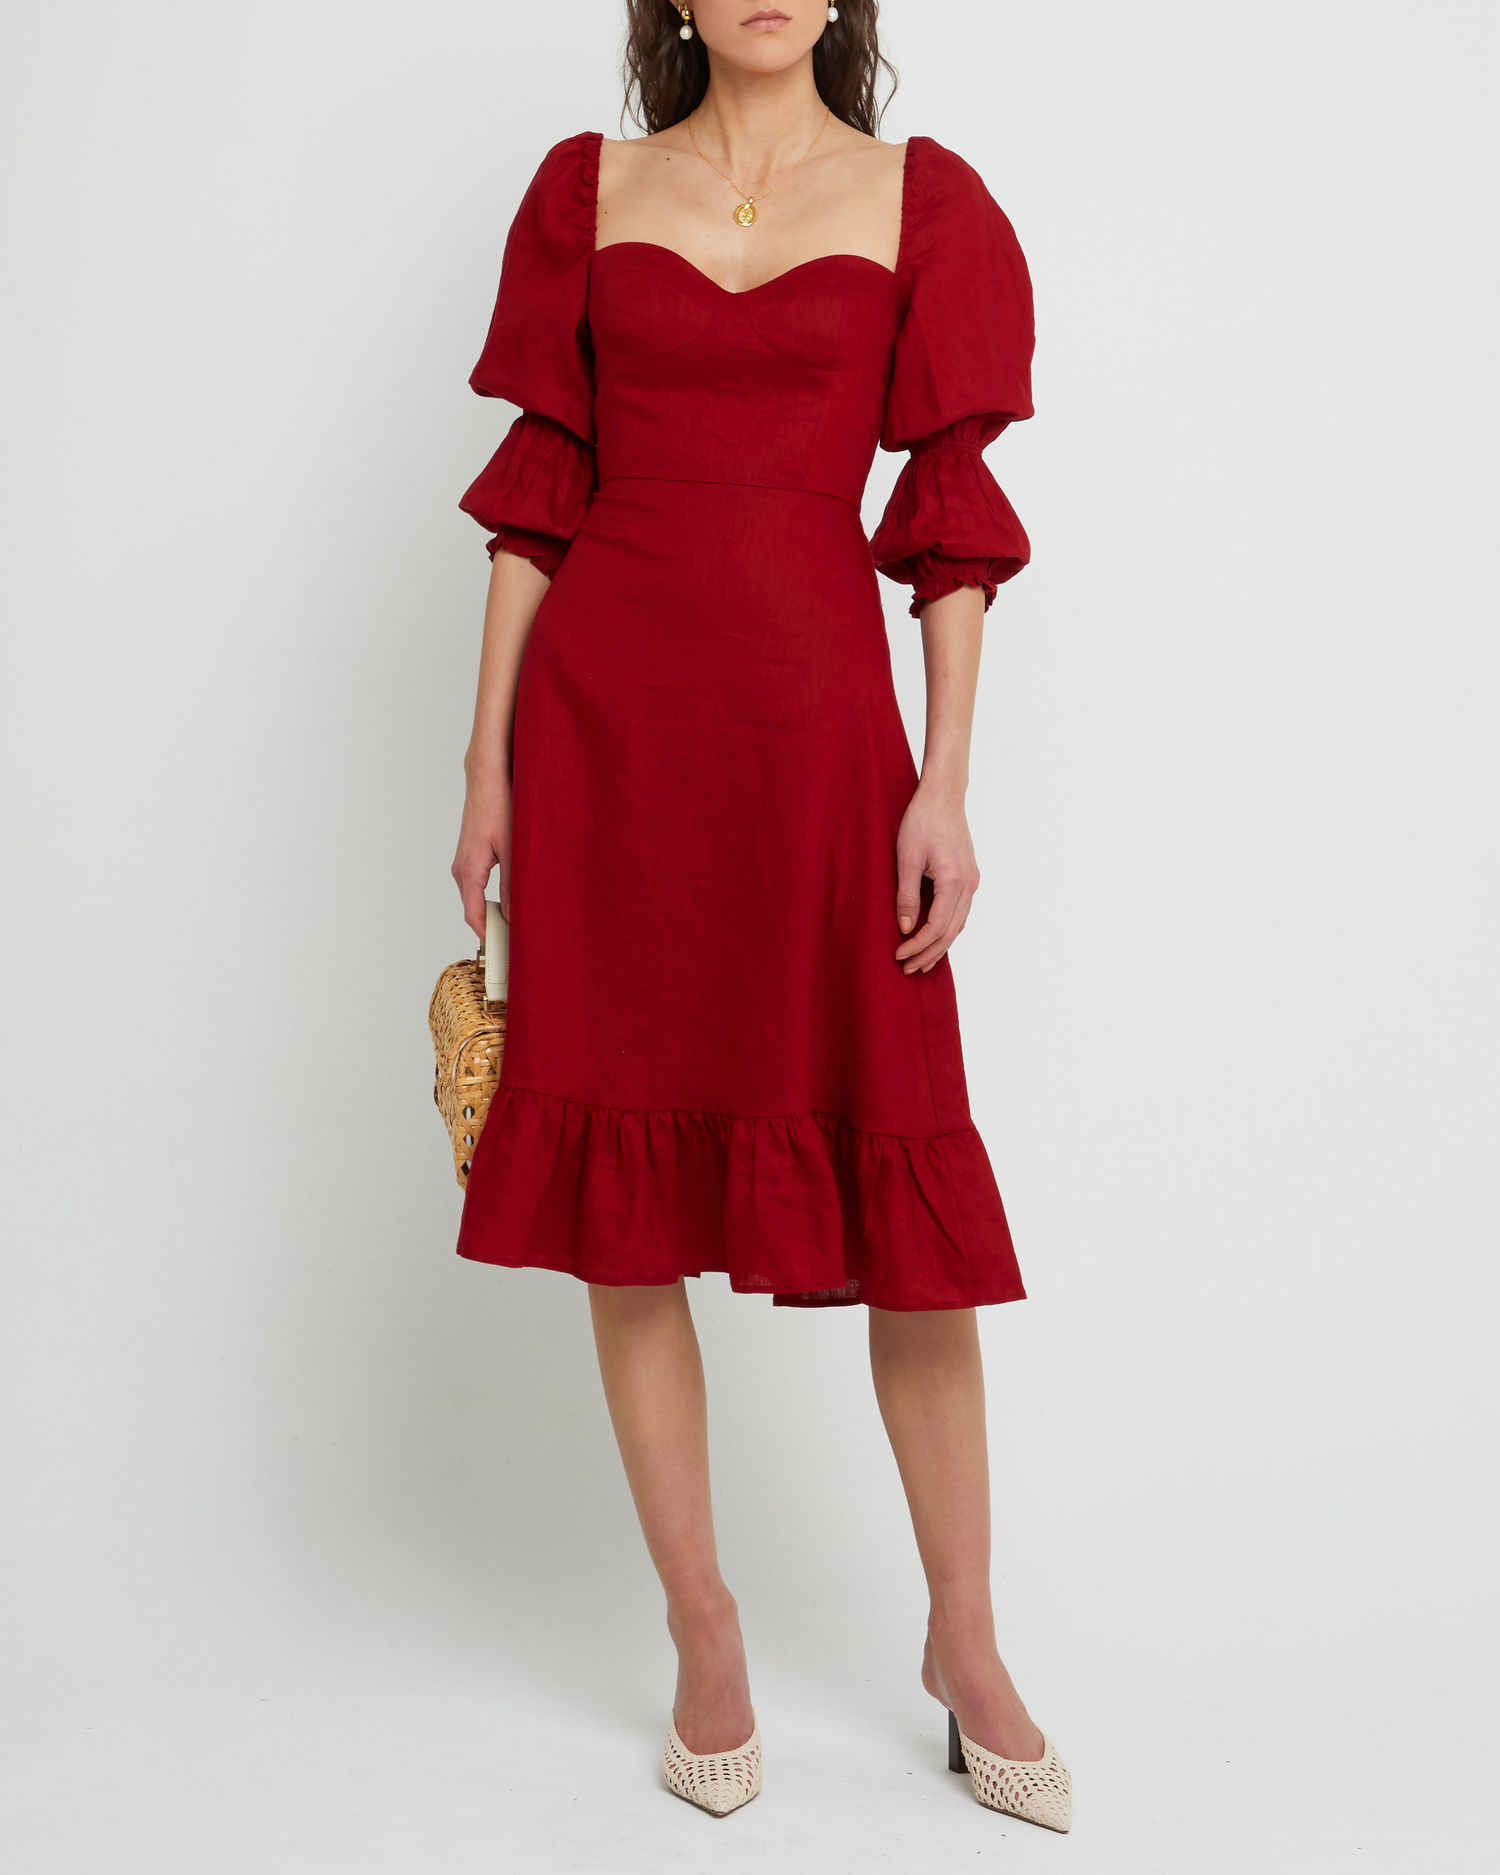 Fourth image of Kourtney Dress, a red midi dress, puff sleeves, romantic, sweetheart neckline, ruffle skirt